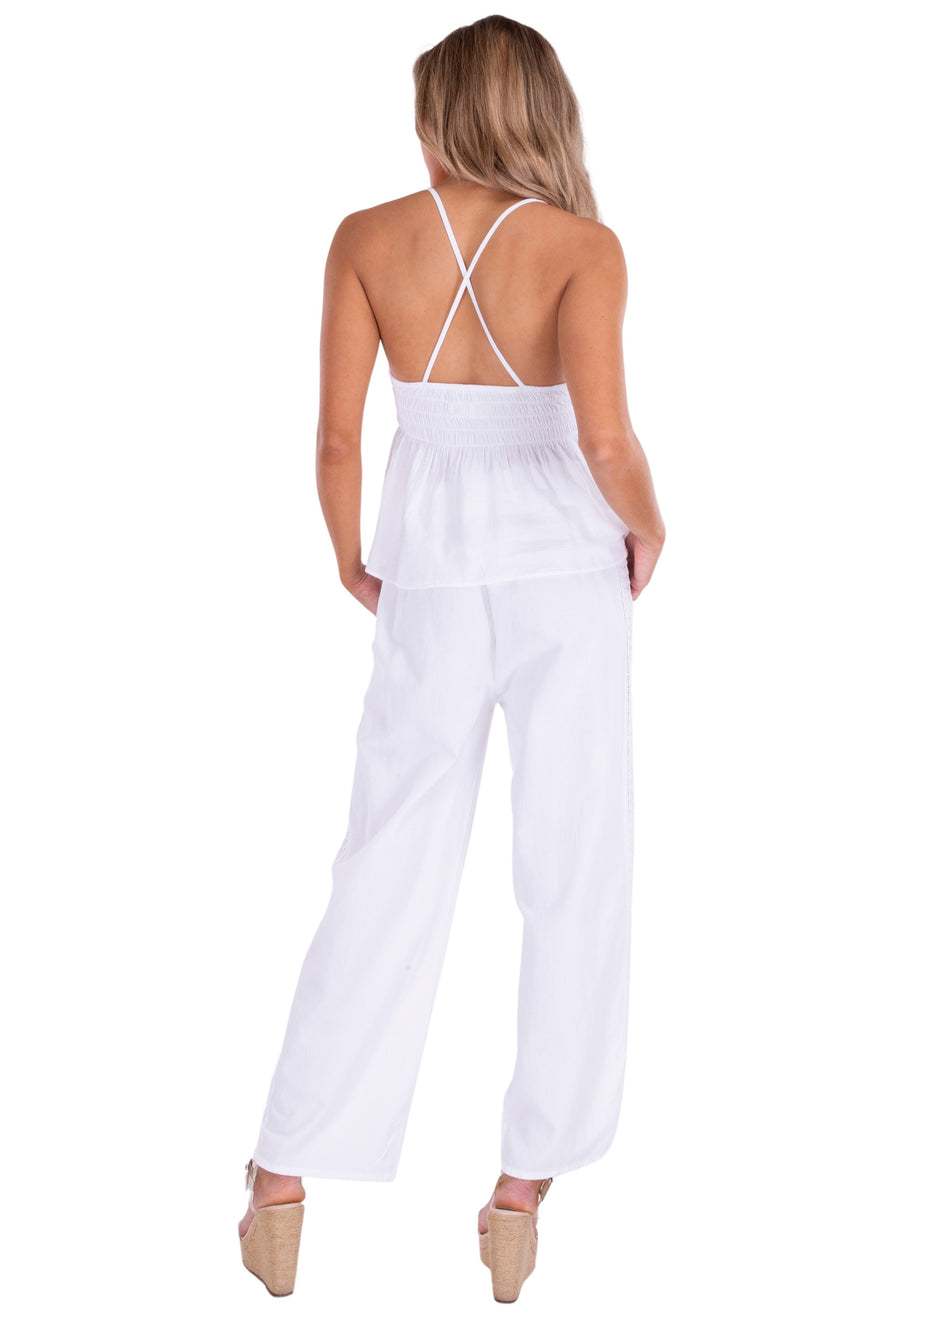 NW1563 - White Cotton Pants